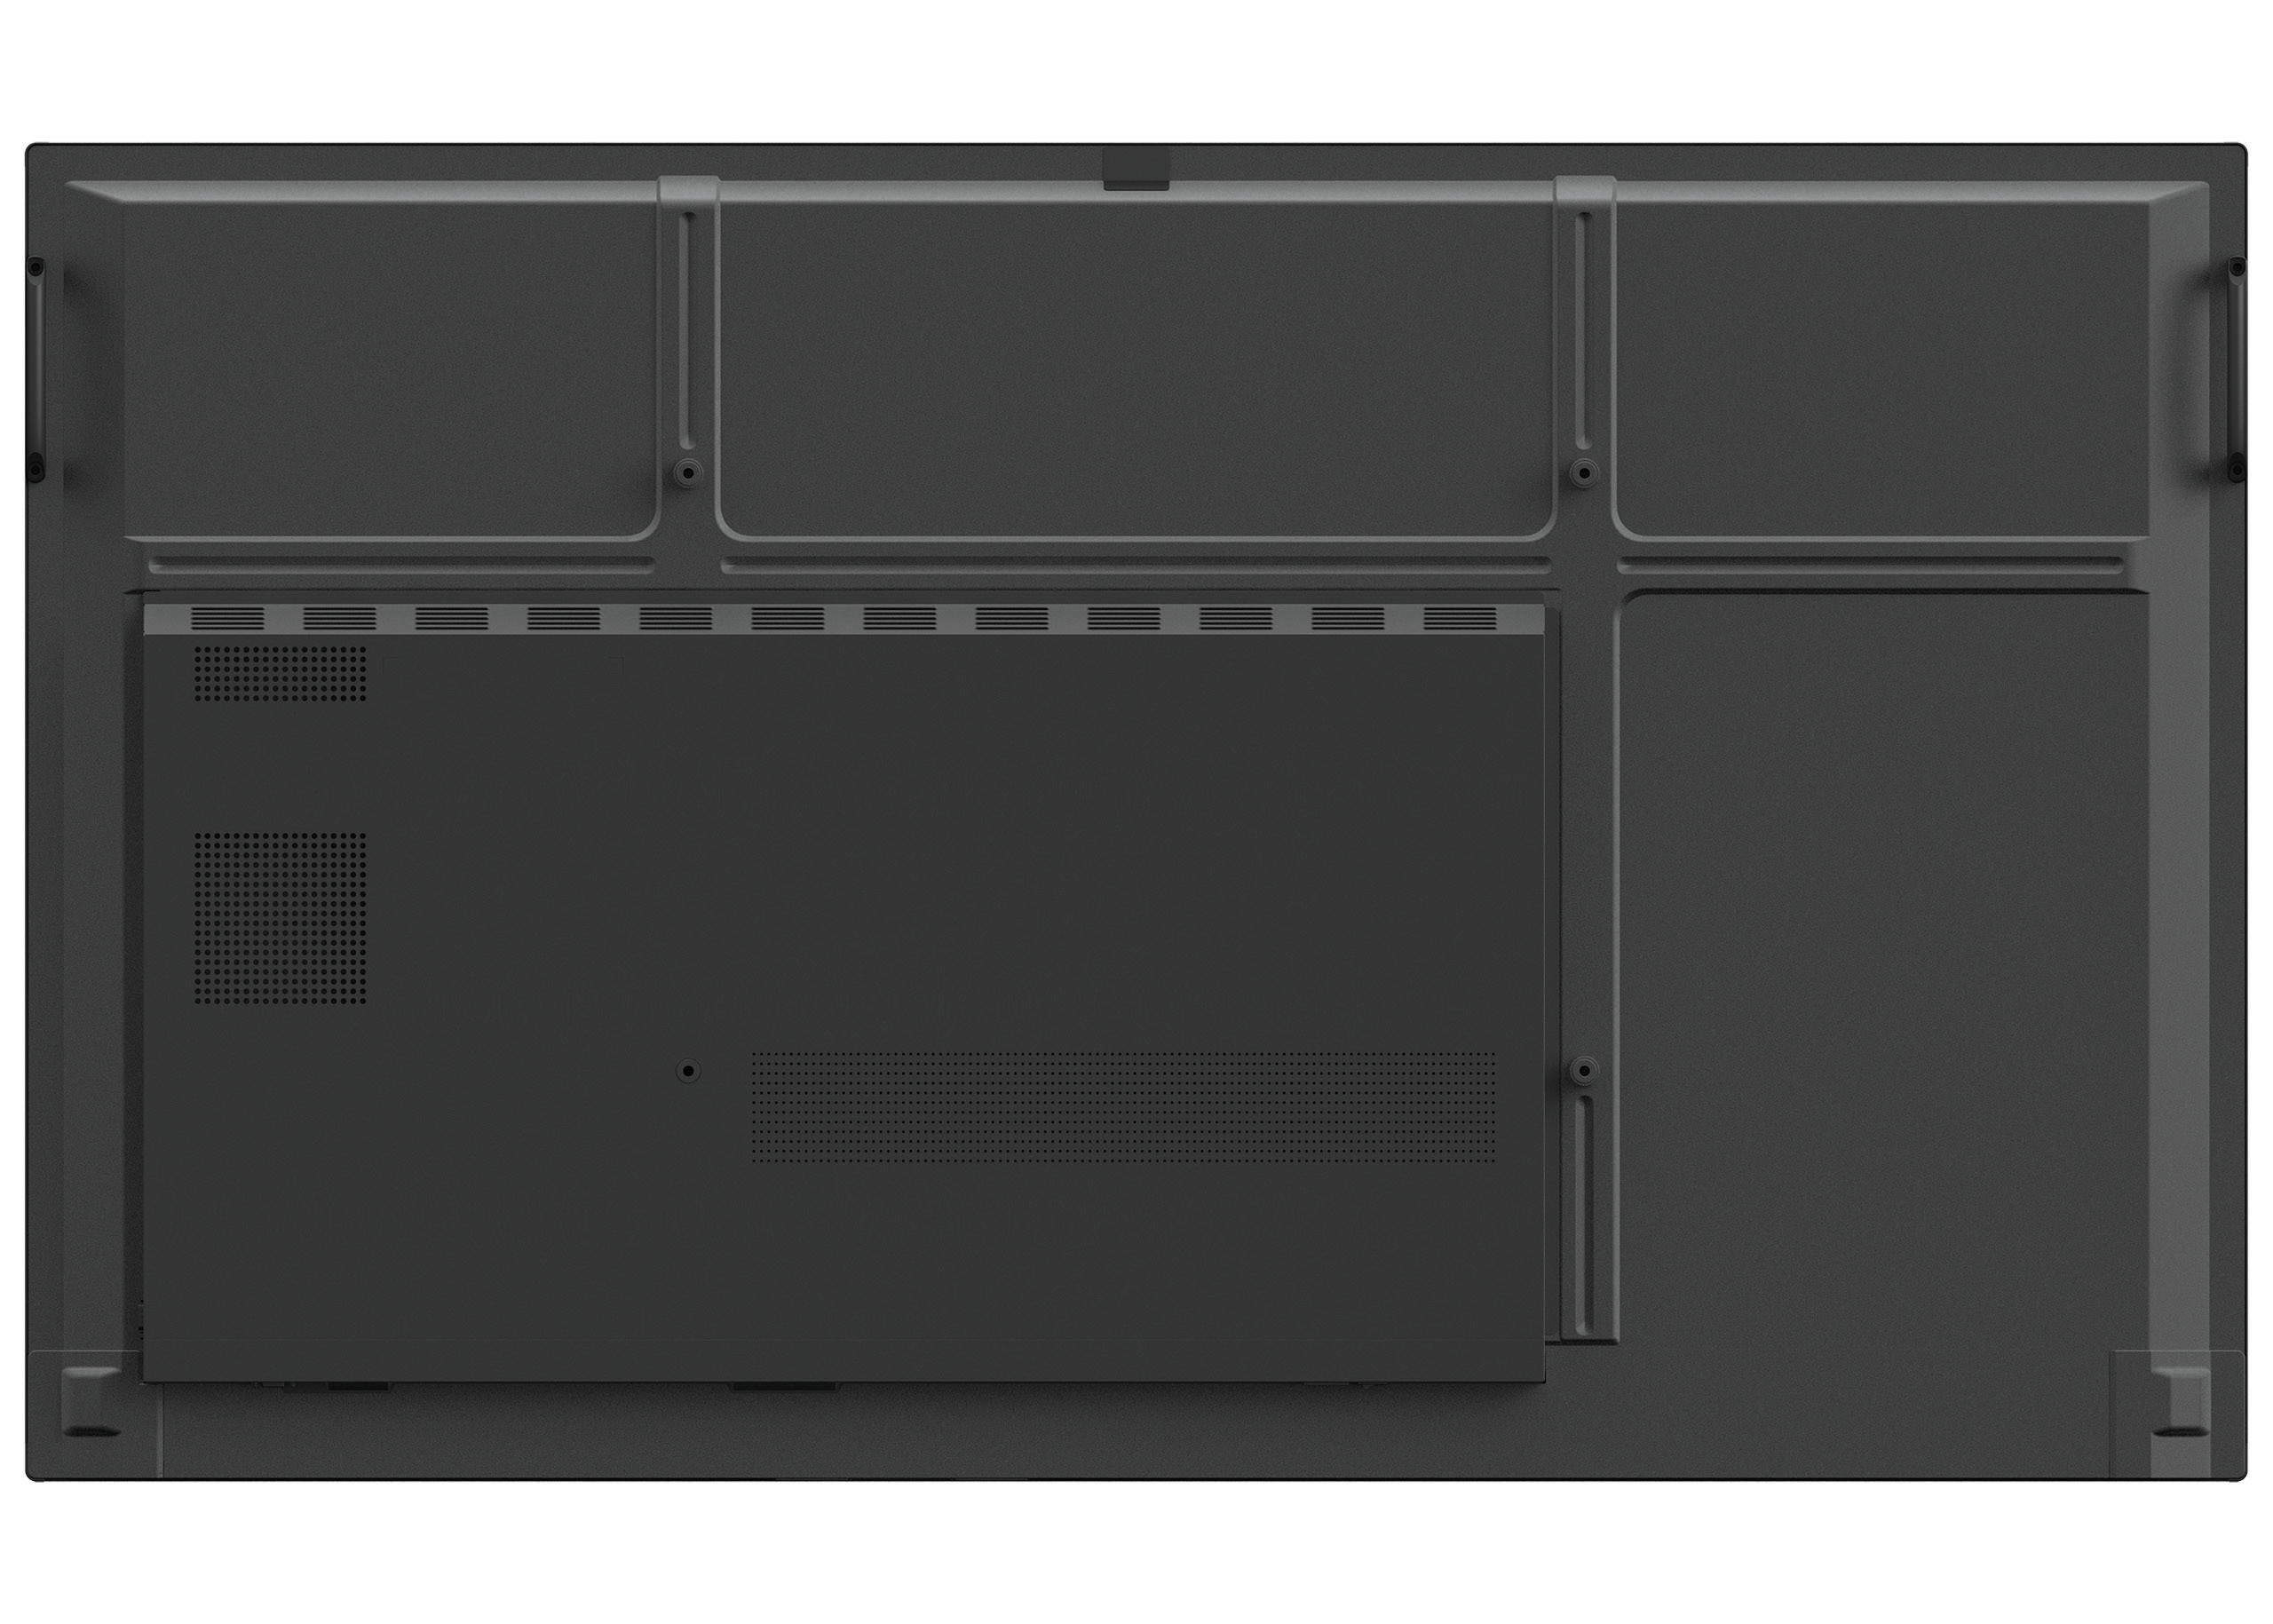 Iiyama TE8602MIS-B1AG - Interaktiver Flachbildschirm - 2,18 m (86 Zoll) - IPS - 3840 x 2160 Pixel - WLAN